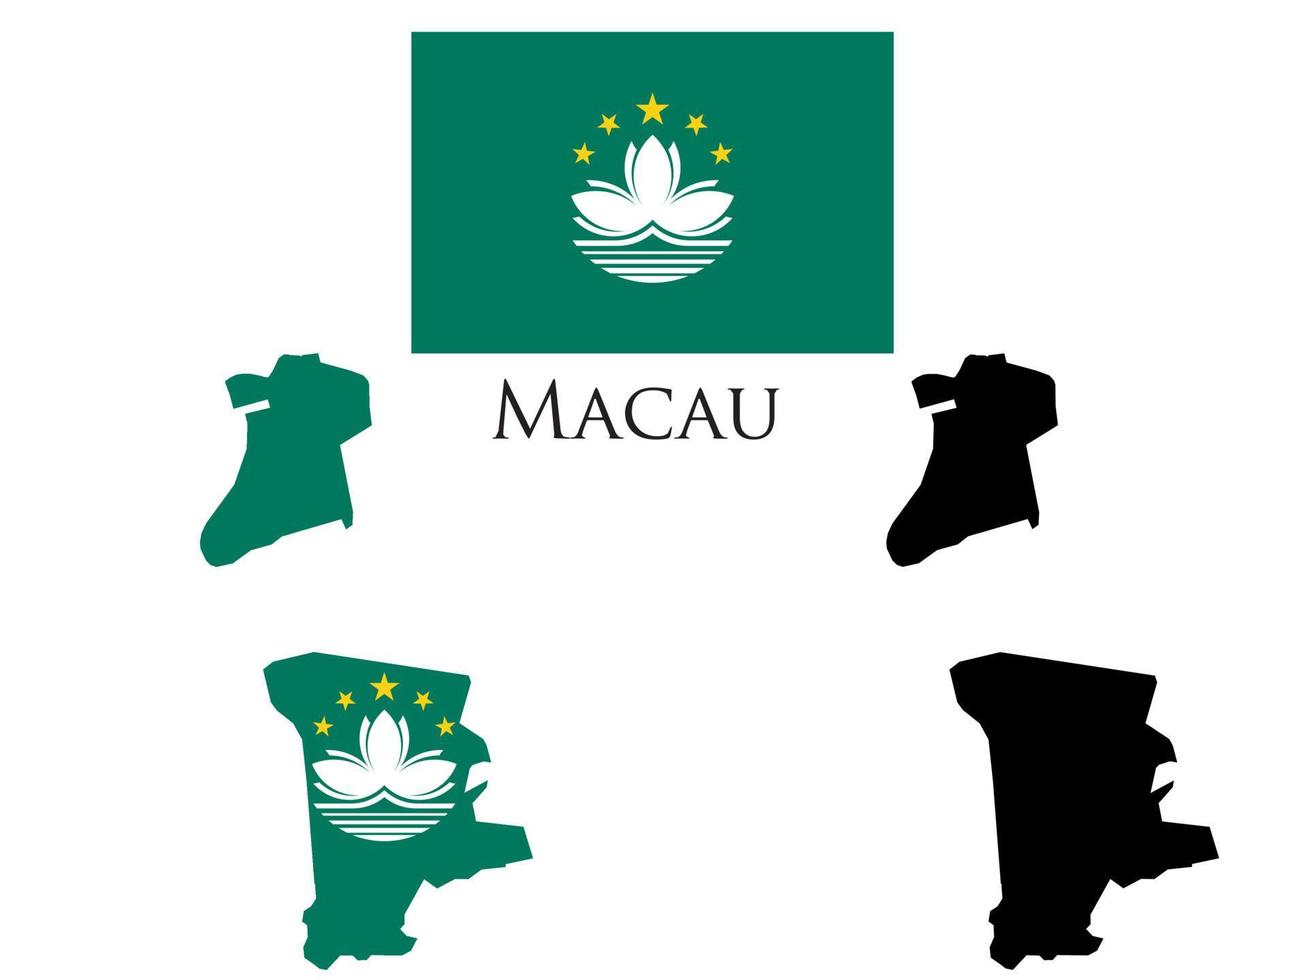 macau flag and map illustration vector